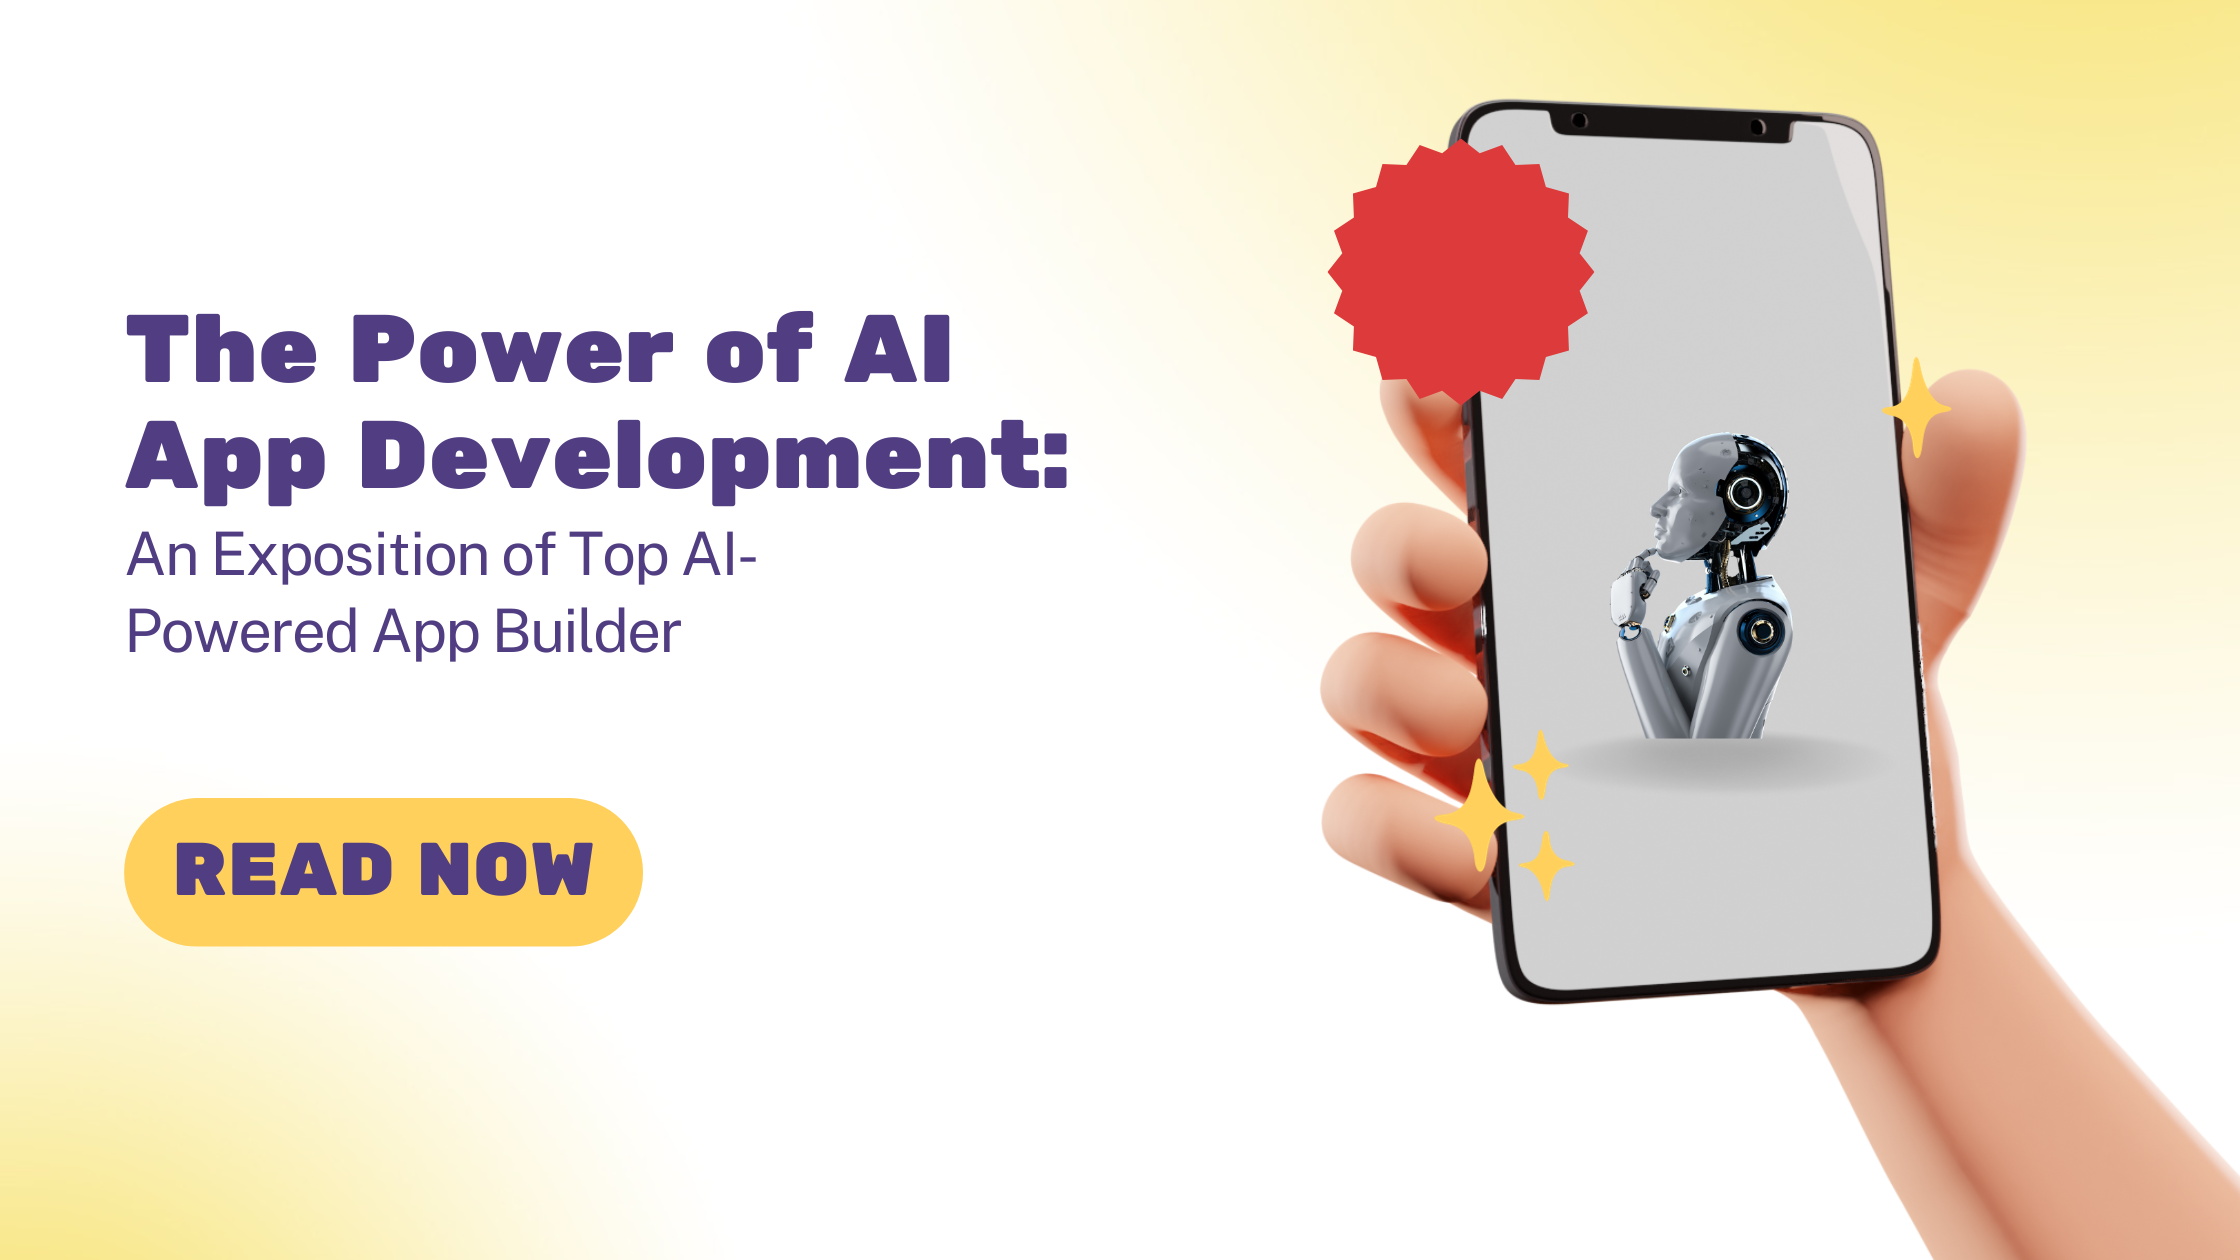 An Exposition of Top AI-Powered App Builder